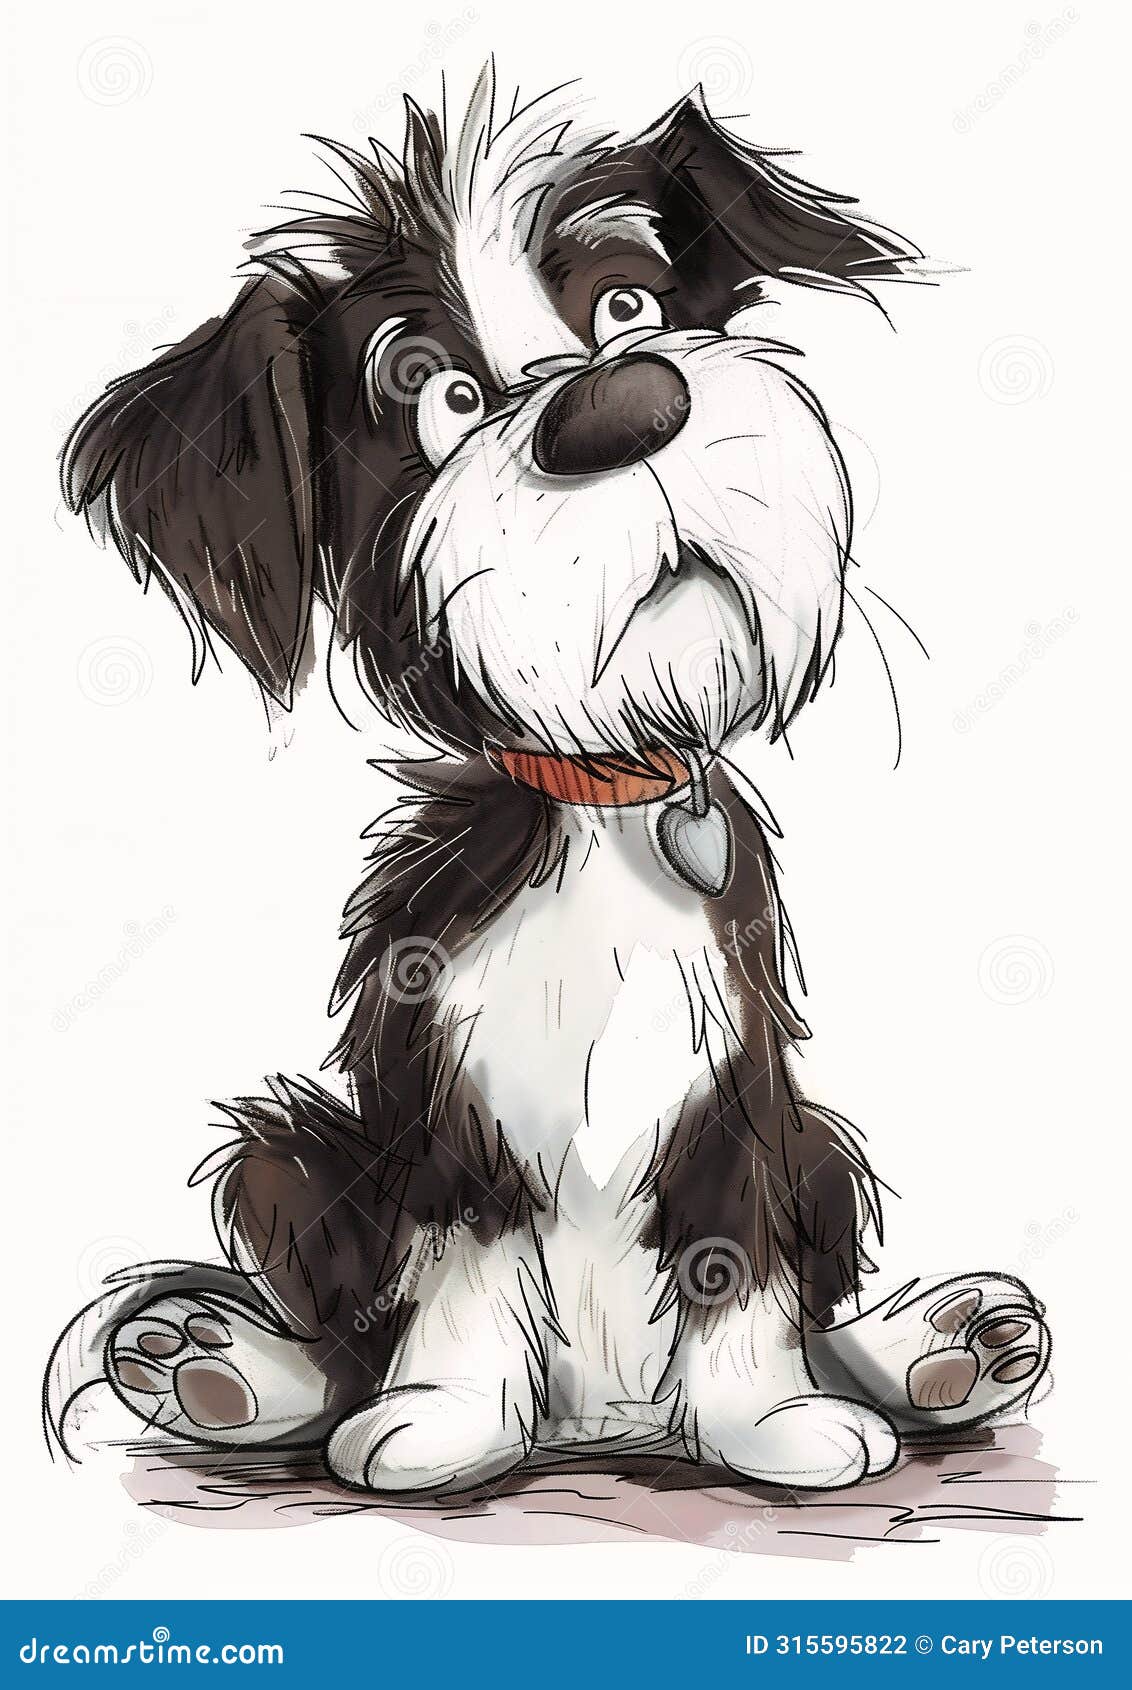 adorable cartoon canine: a delightful portrait of a gruff yet ch